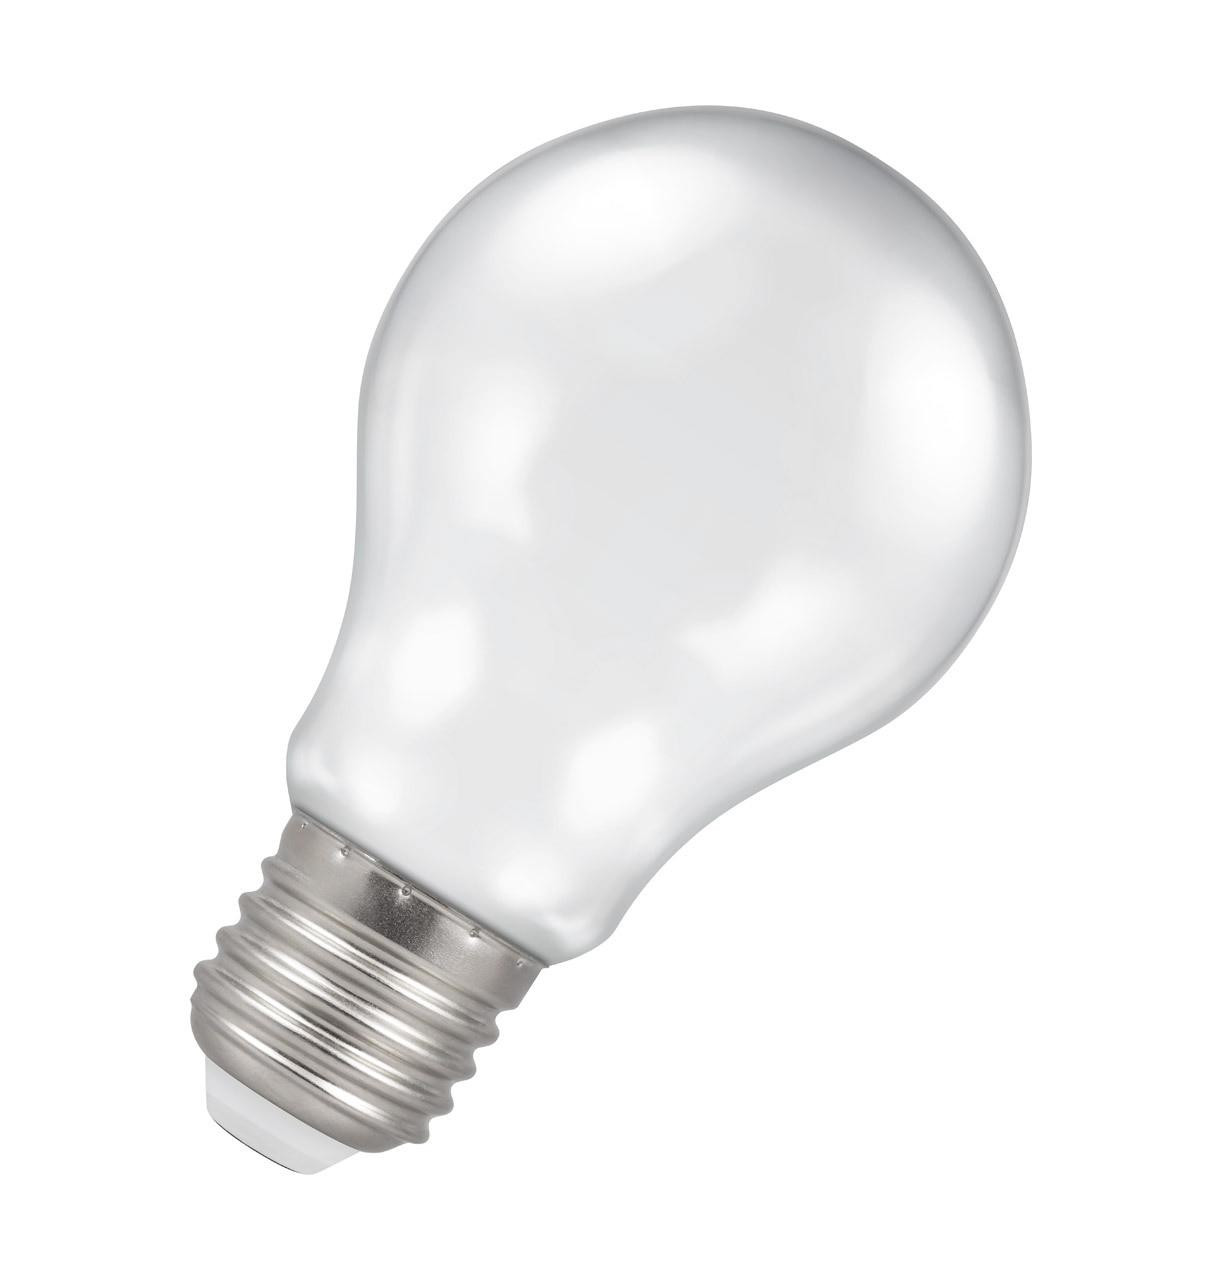 Crompton LED GLS 4.5W E27 IP65 White Translucent | Lightbulbs Direct